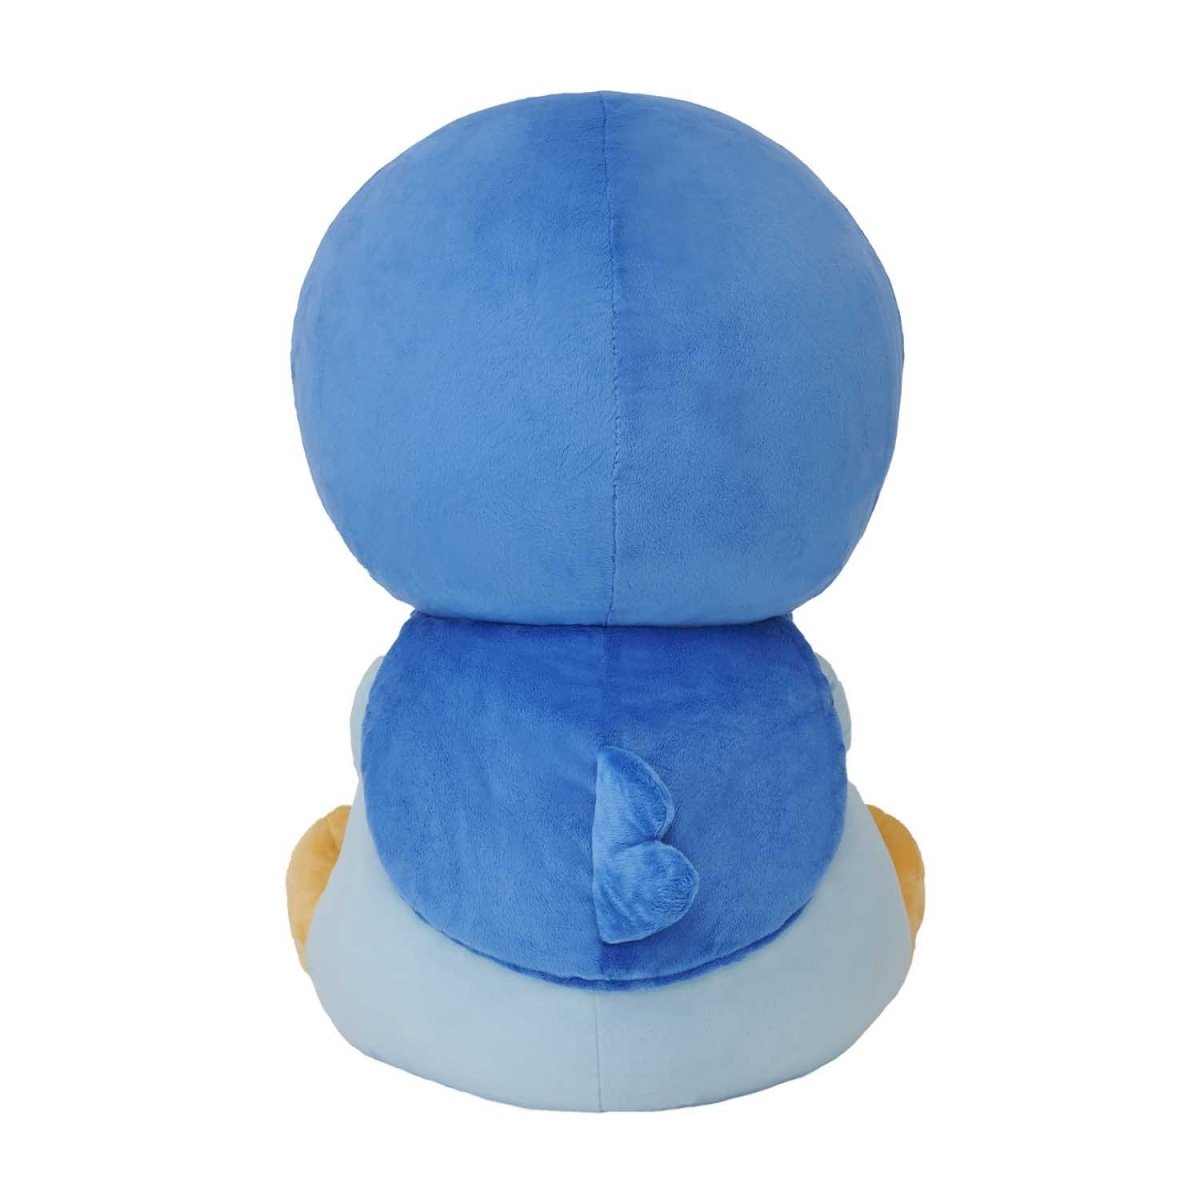 Bluey - Large 30 cm talking plush